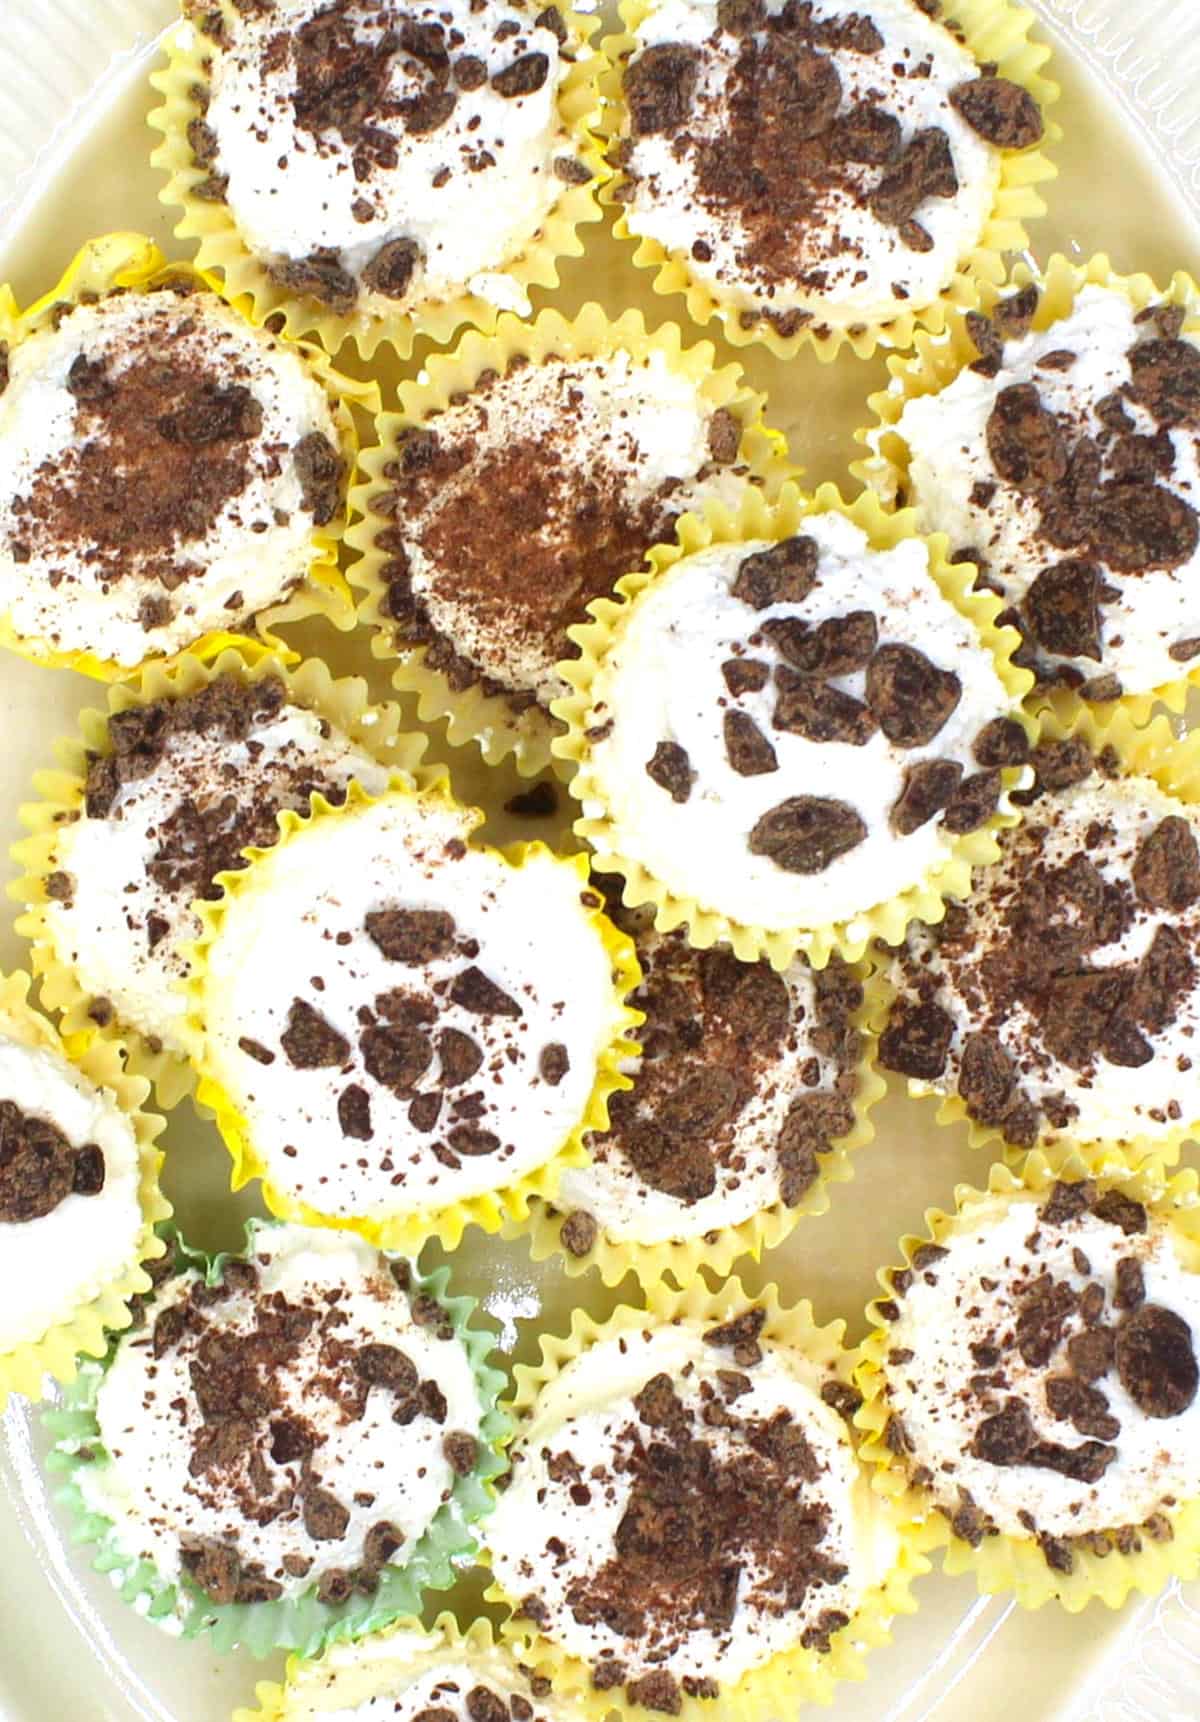 Mini vegan keto cheesecake bites in yellow and green muffin liners with chocolate bits.